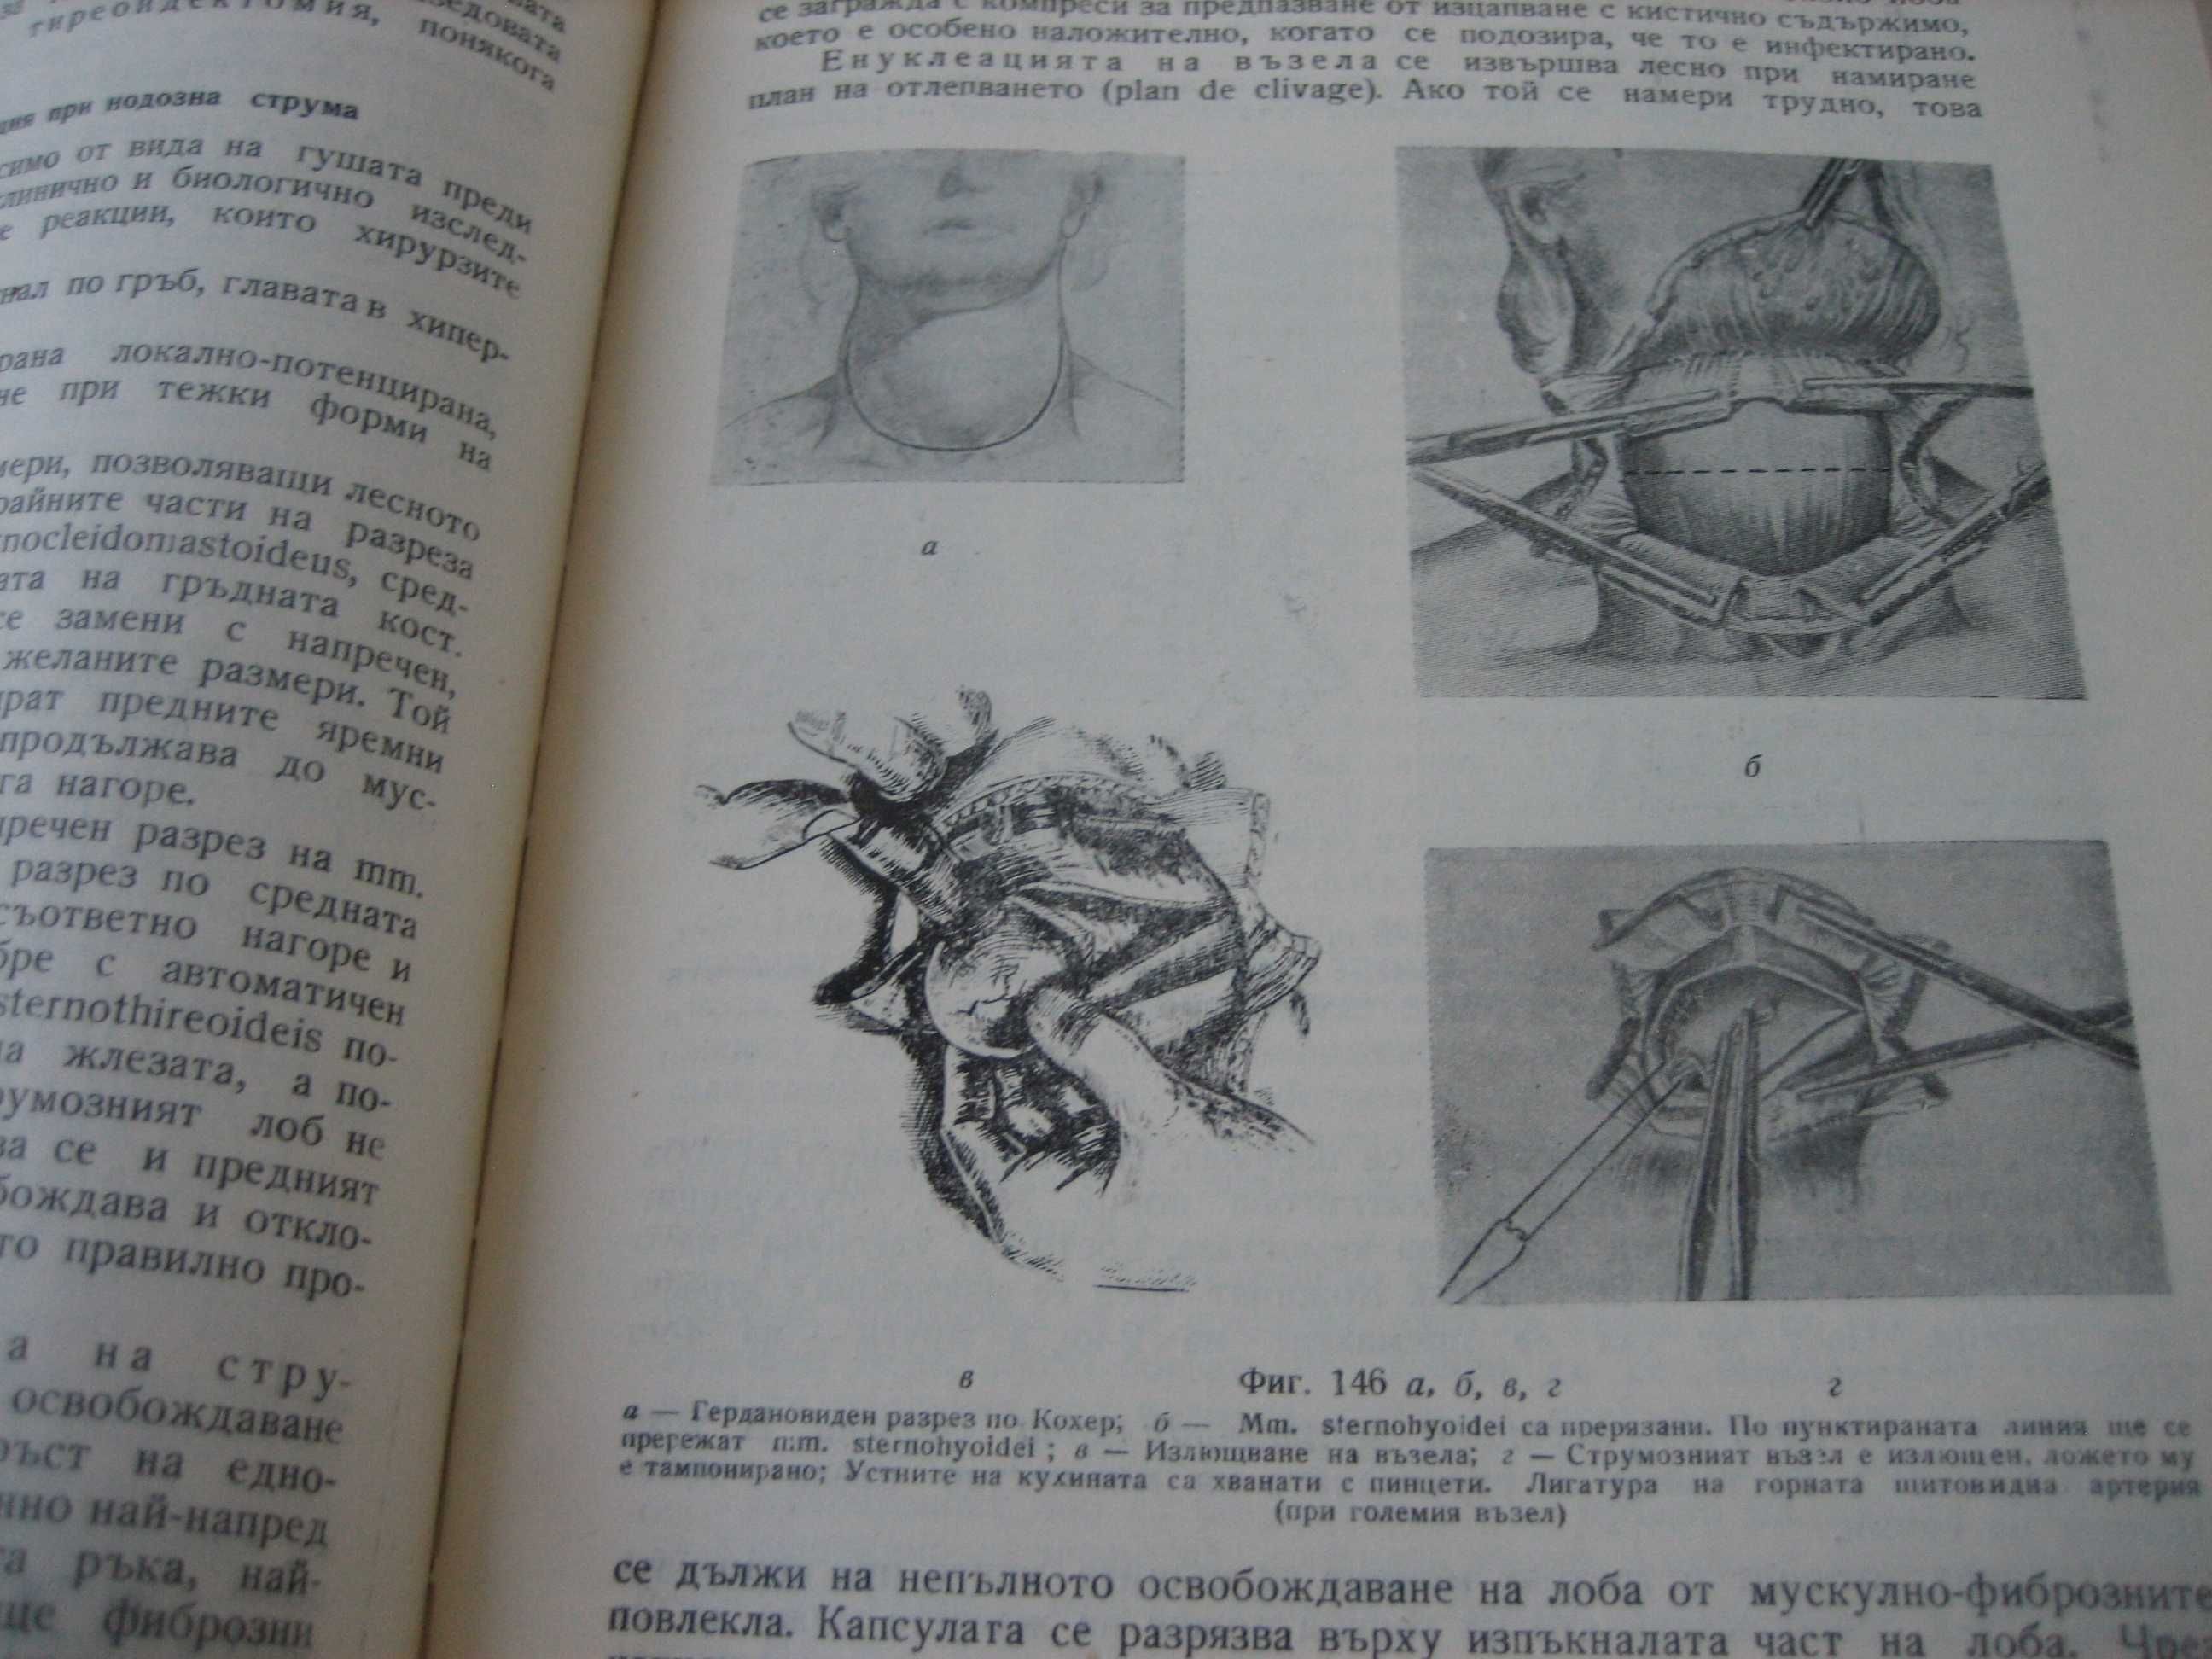 Оперативна хирургия - том 3 - 1962 г.